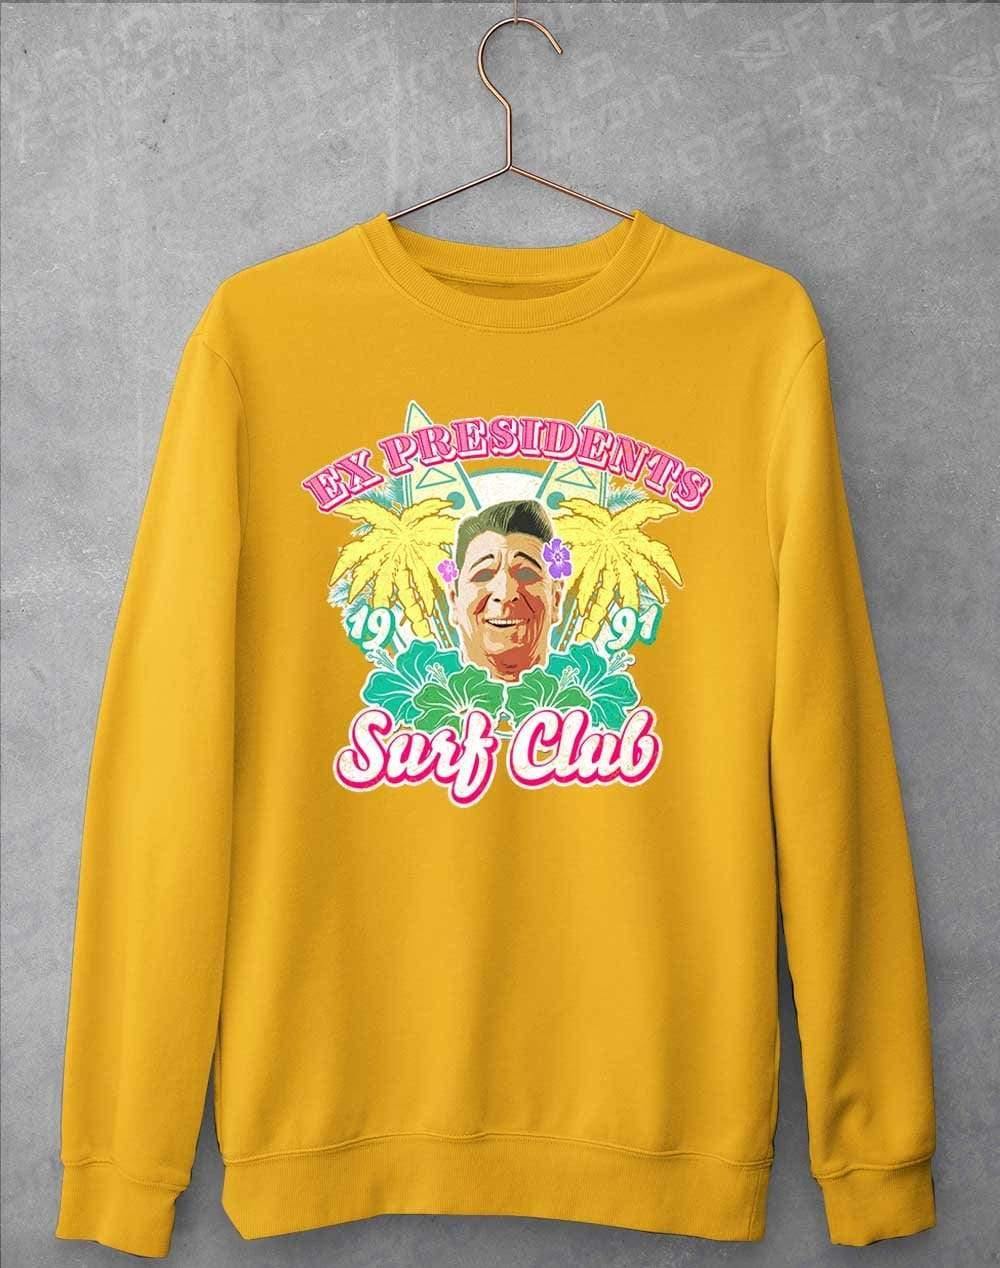 Ex Presidents Surf Club Sweatshirt S / Gold  - Off World Tees